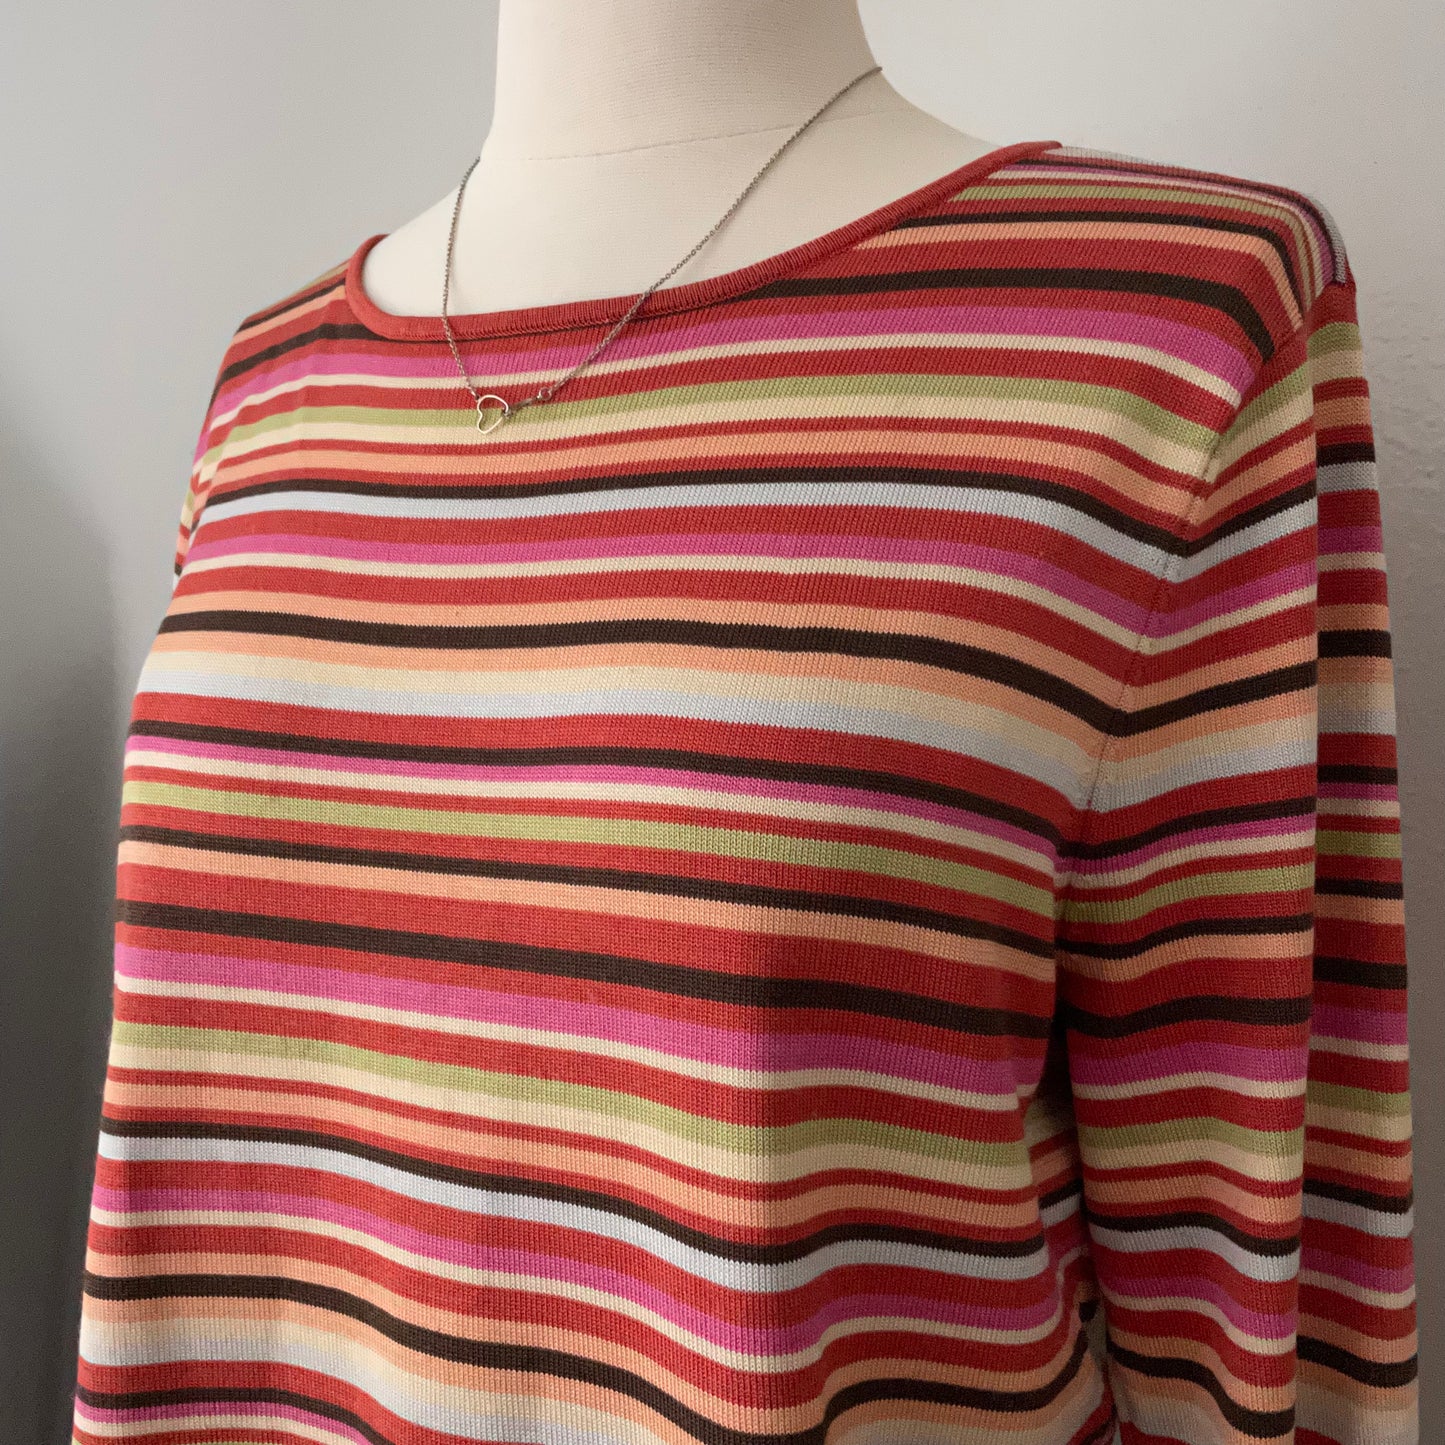 Vintage Retro Striped Colorful Silk Top (M)